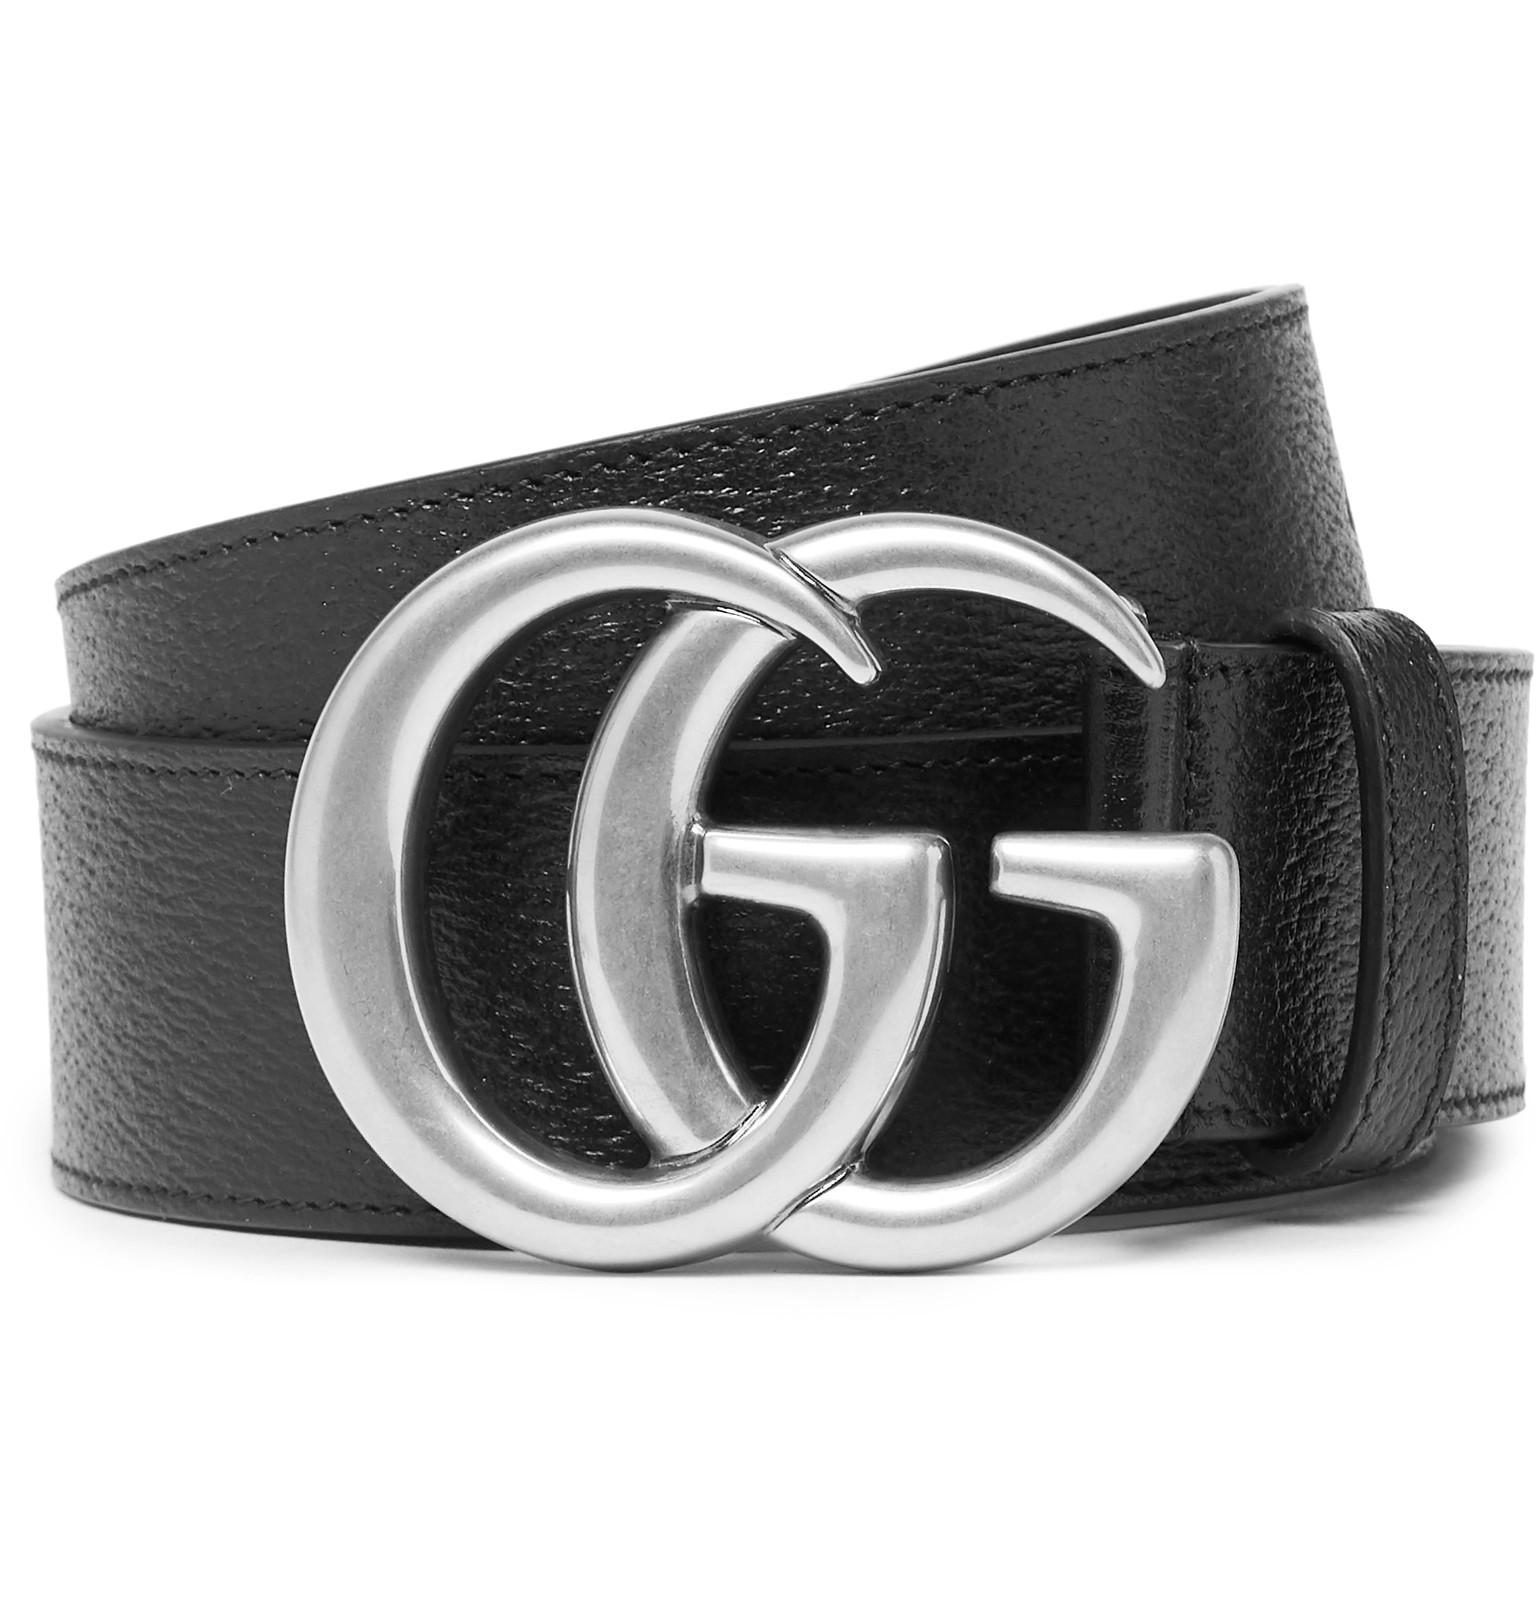 Gucci 4cm Full-grain Leather Belt in Black for Men - Lyst